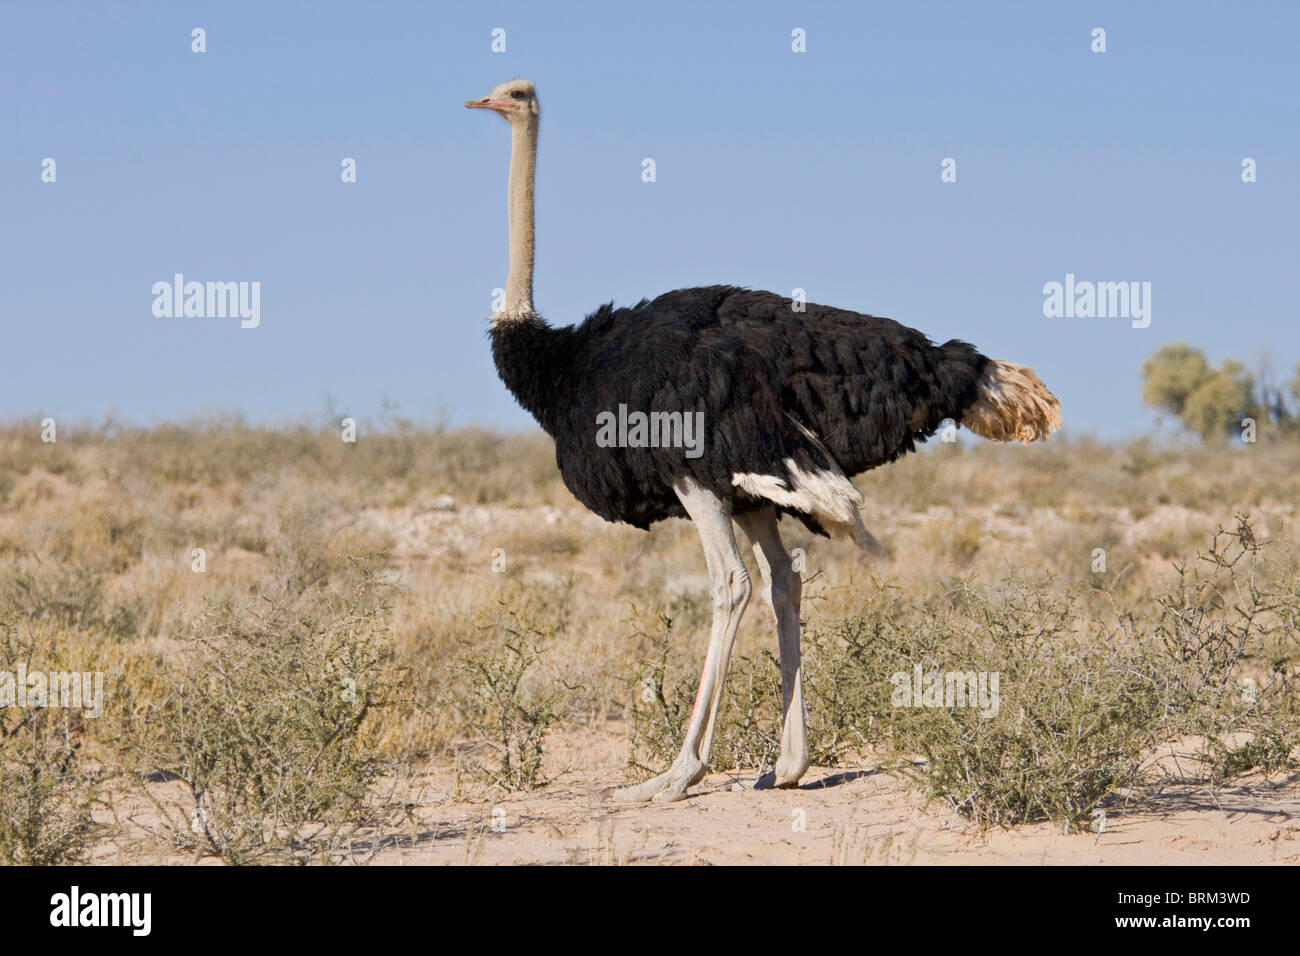 Common ostrich Stock Photo